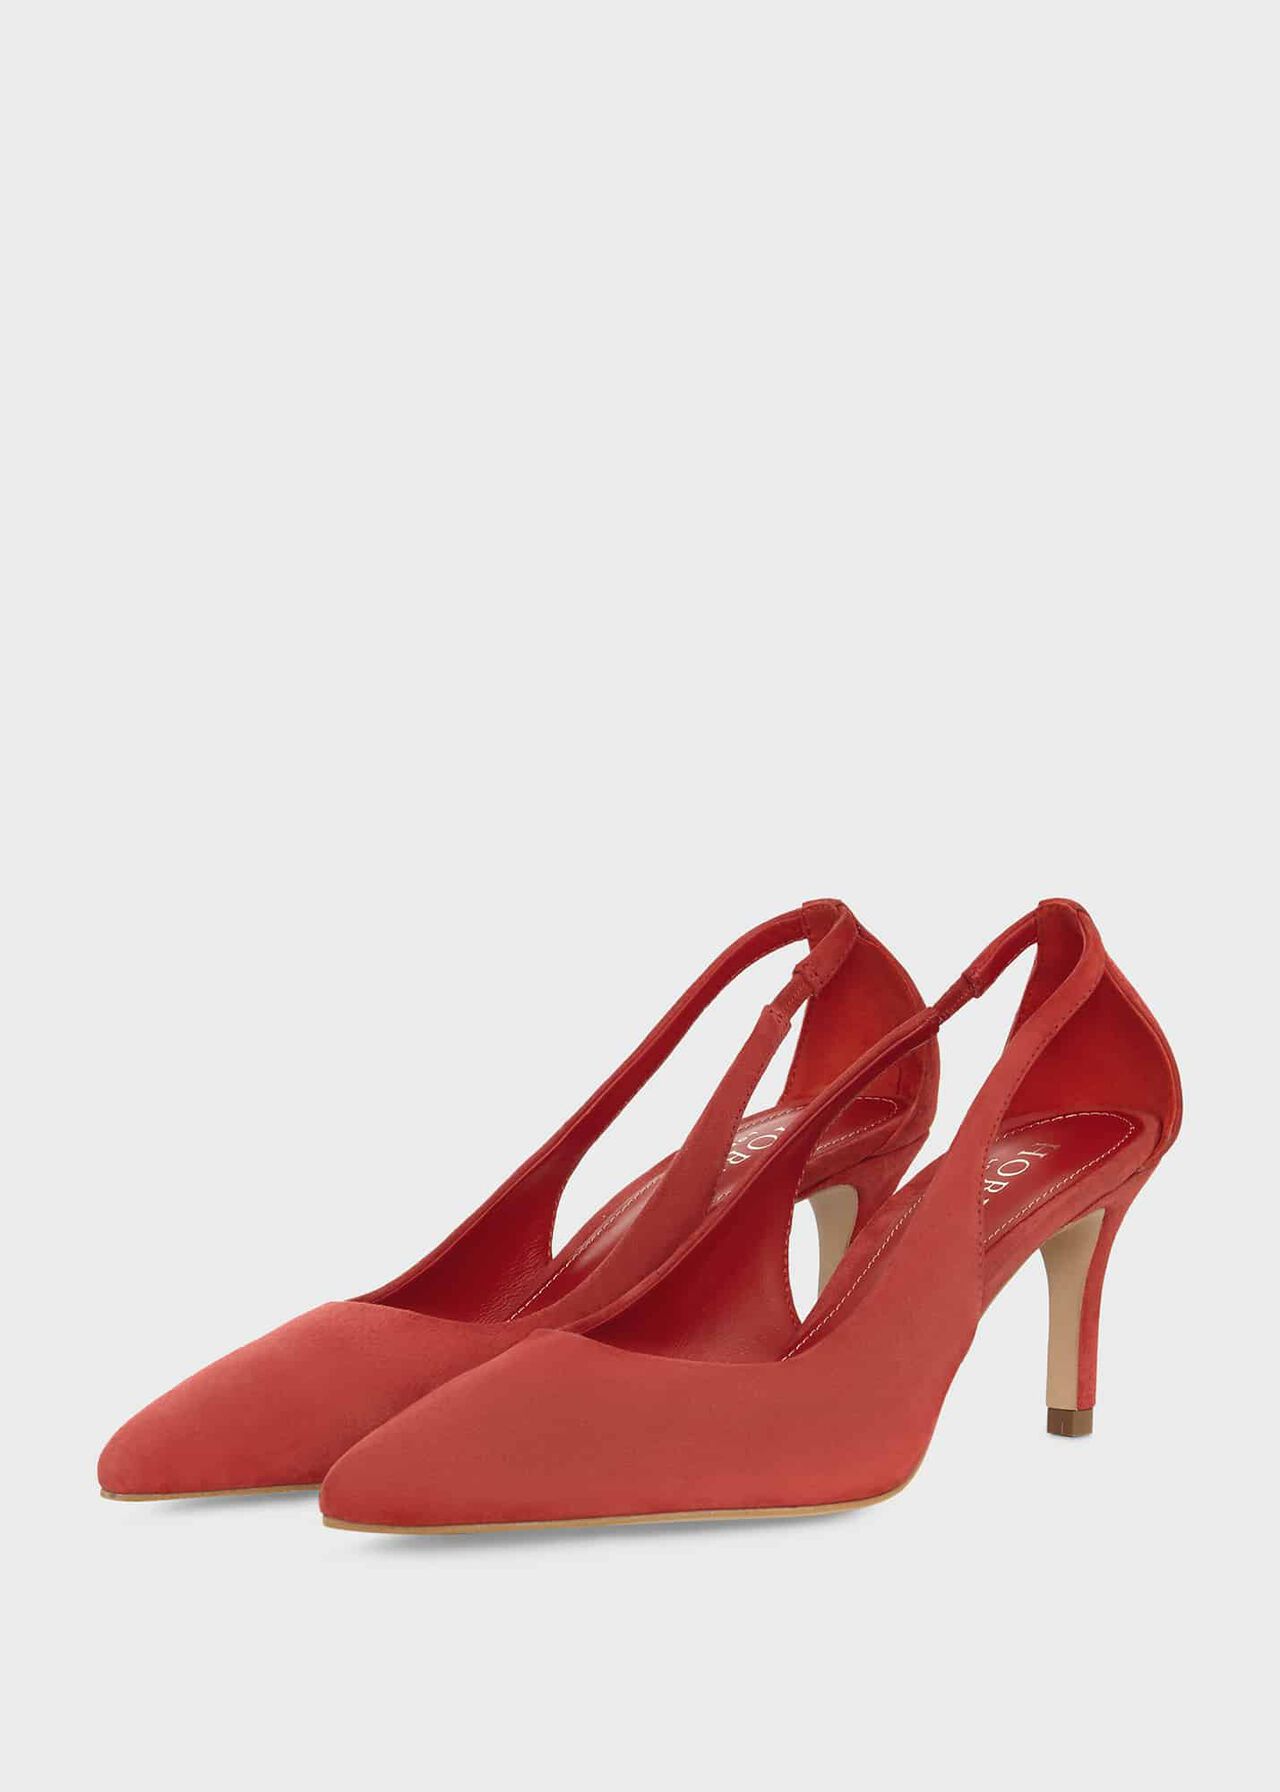 Natasha Court Shoes, Deep Cherry Red, hi-res